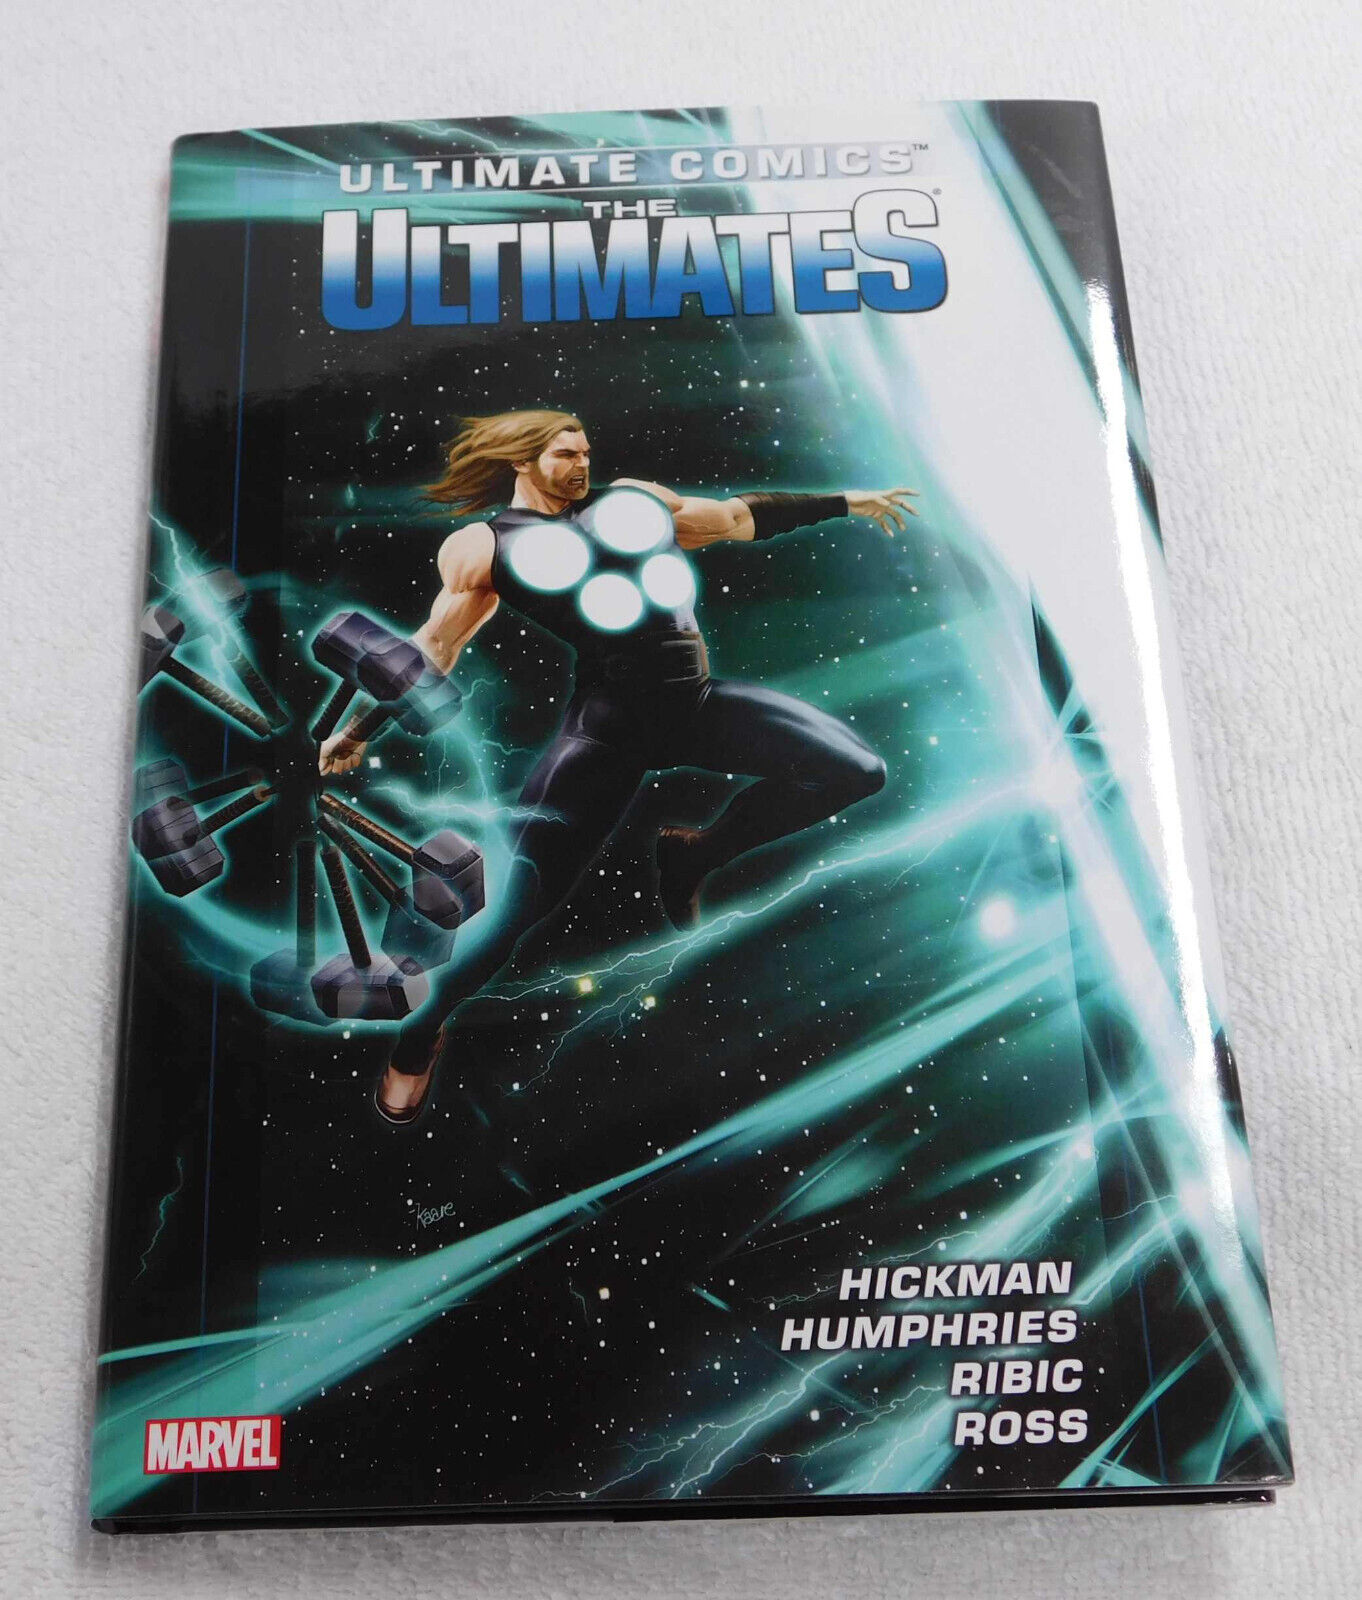 Ultimate Comics Ultimates by Jonathan Hickman Volume 2 Hardcover Esad Ribic